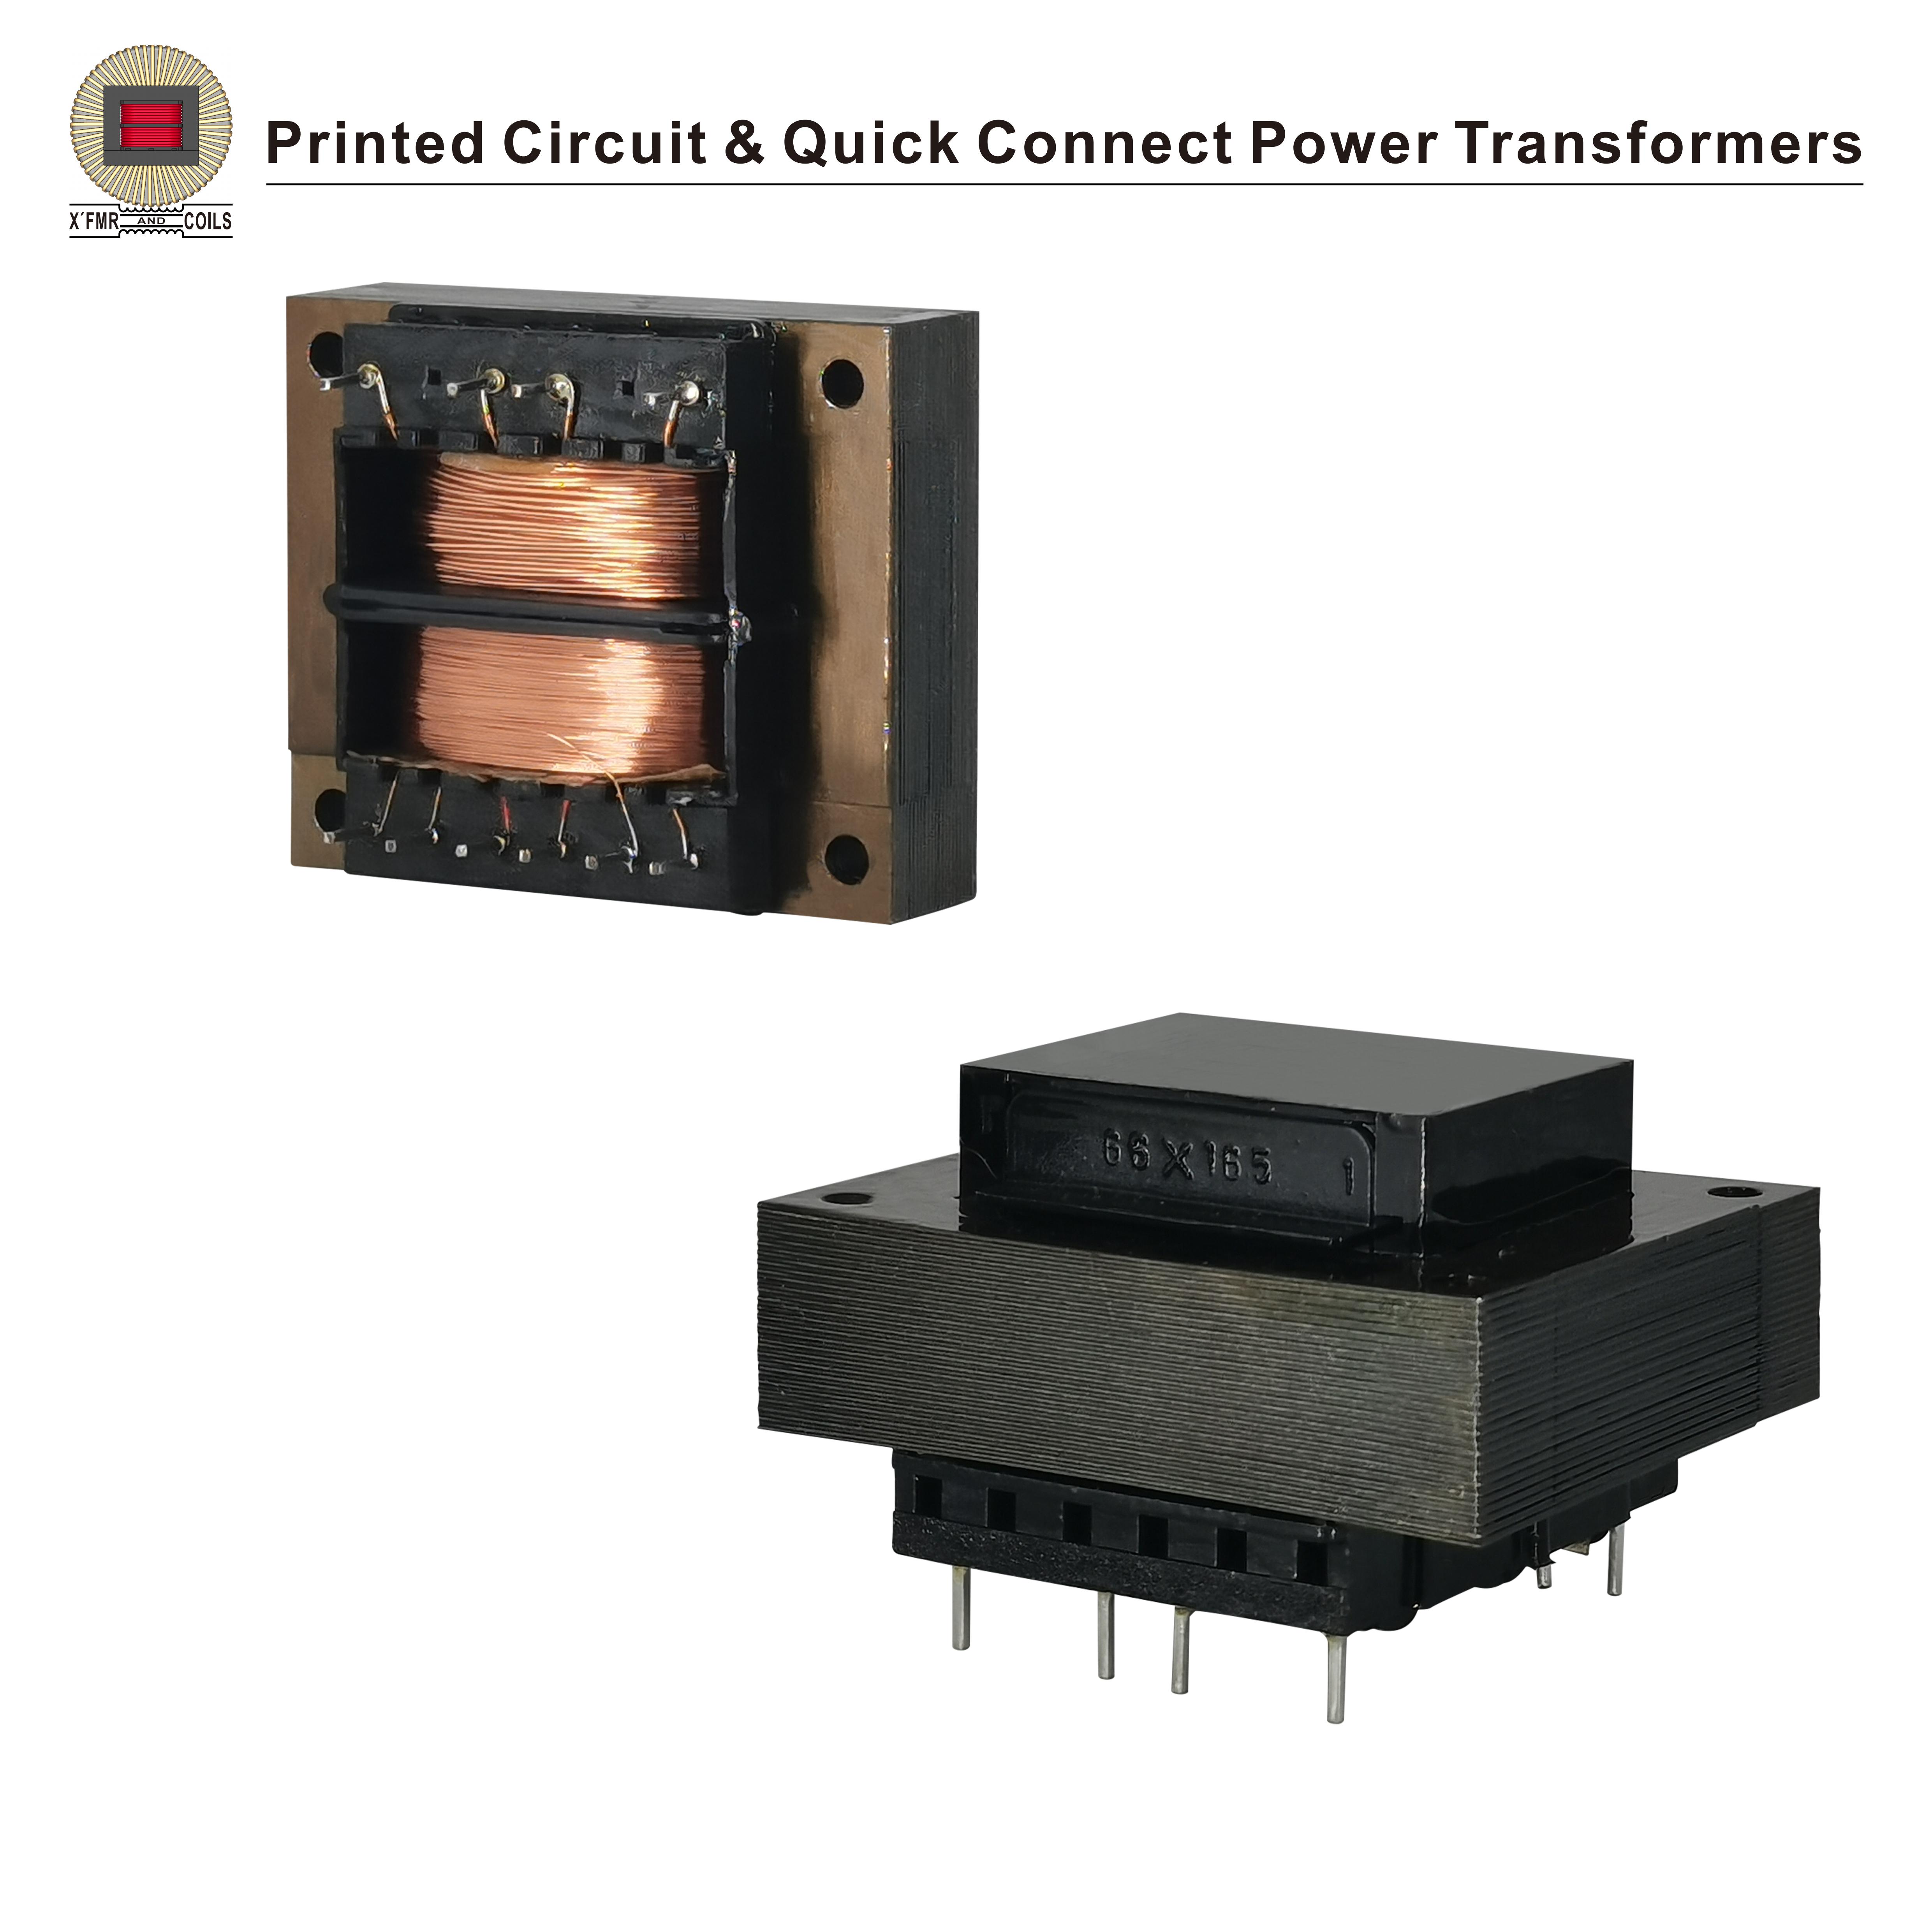 Printed Circuit Power Transformer PCPT-04 Series